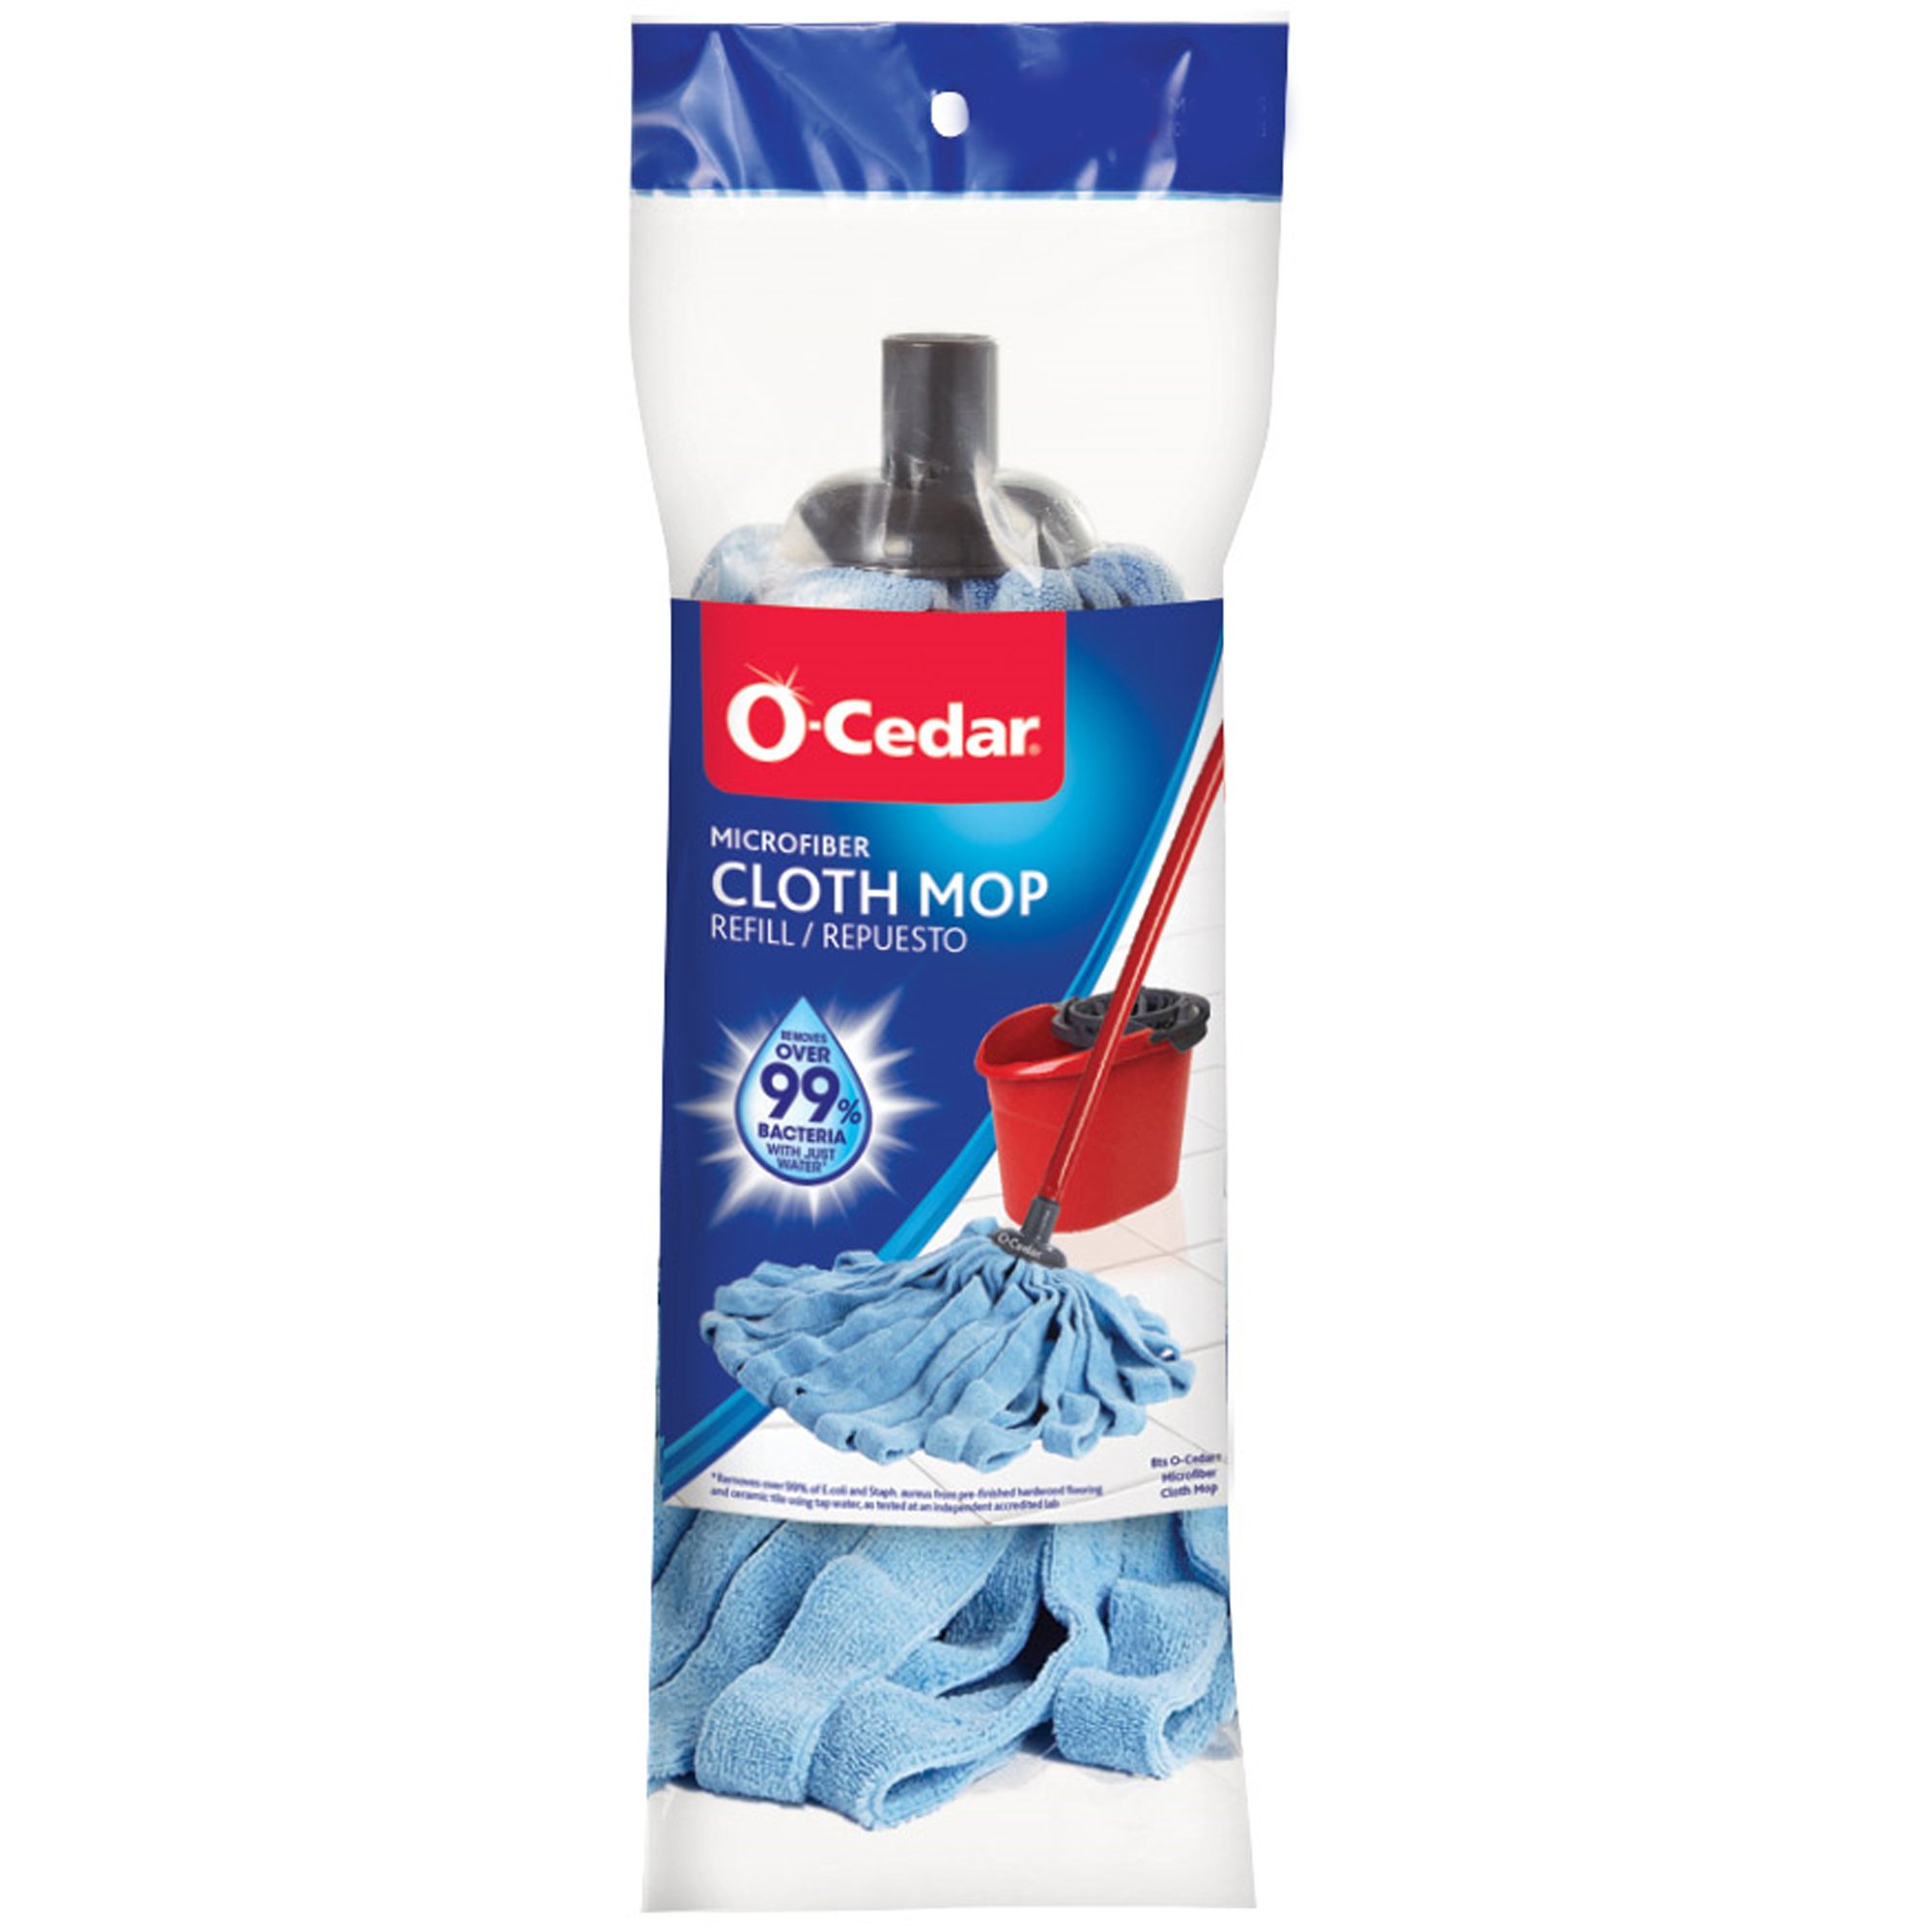 O-Cedar Microfiber Cloth Mop Refill 